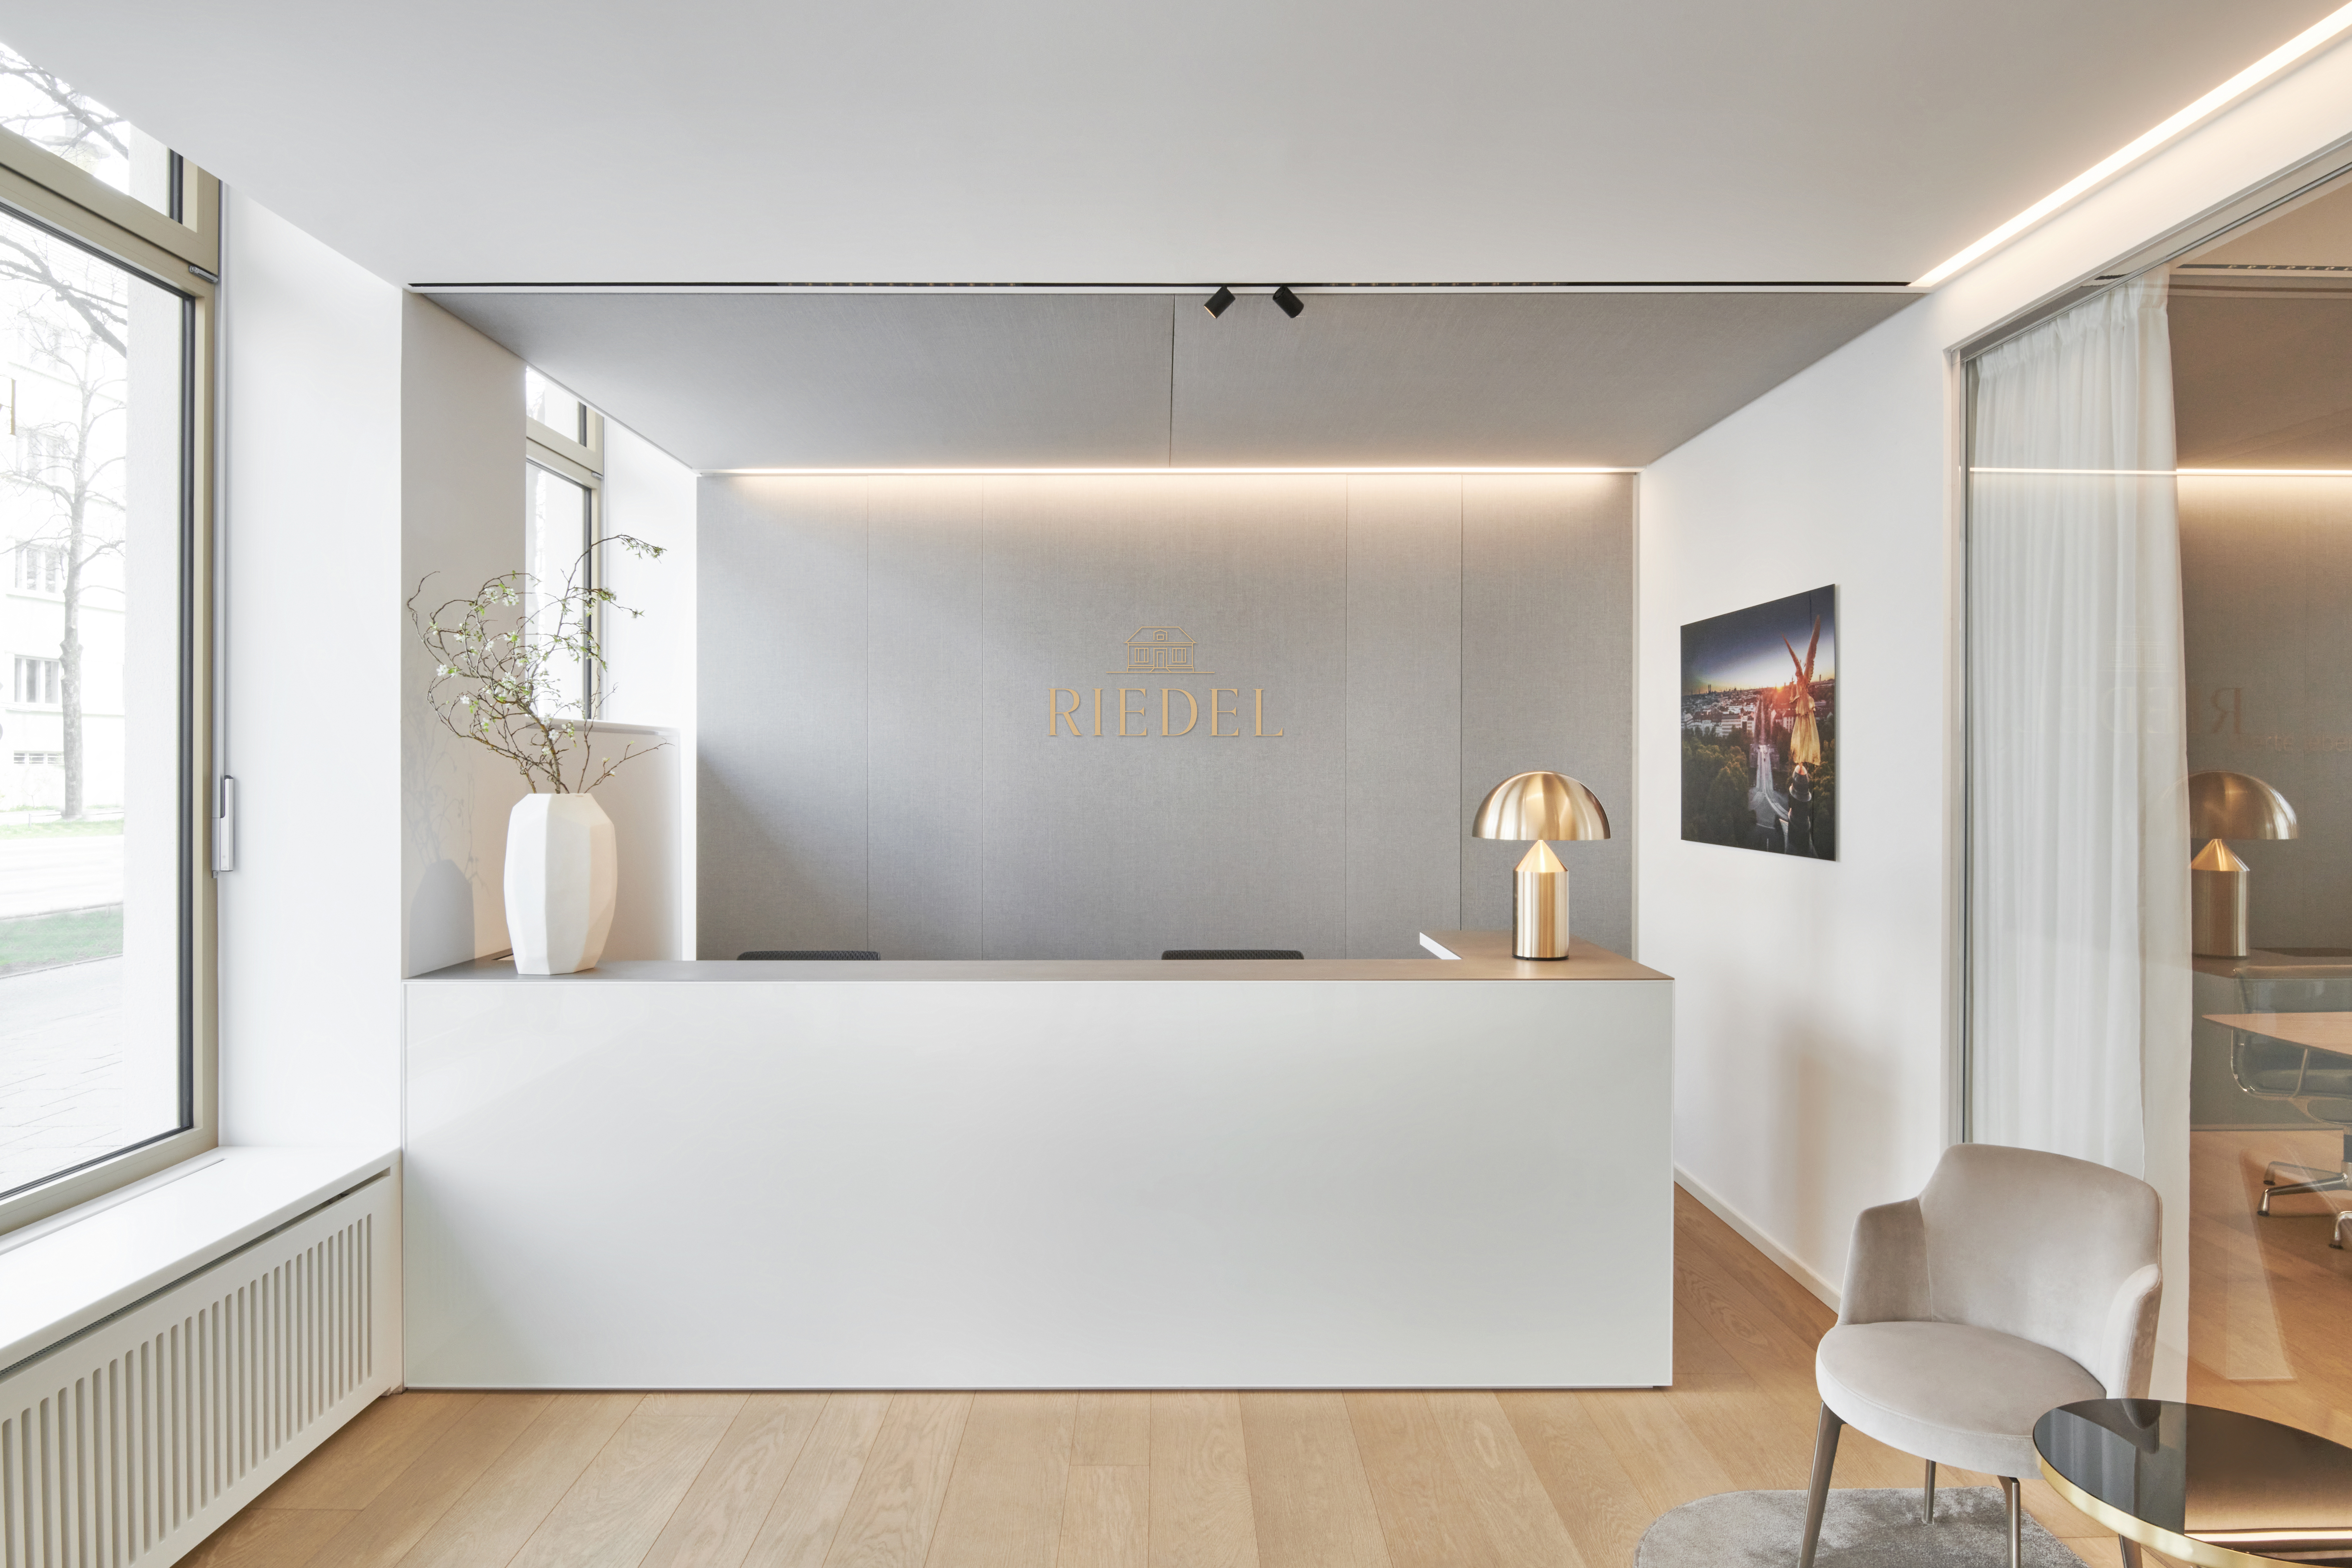 Reimann Architecture Interior Design Office Riedel Immobilien